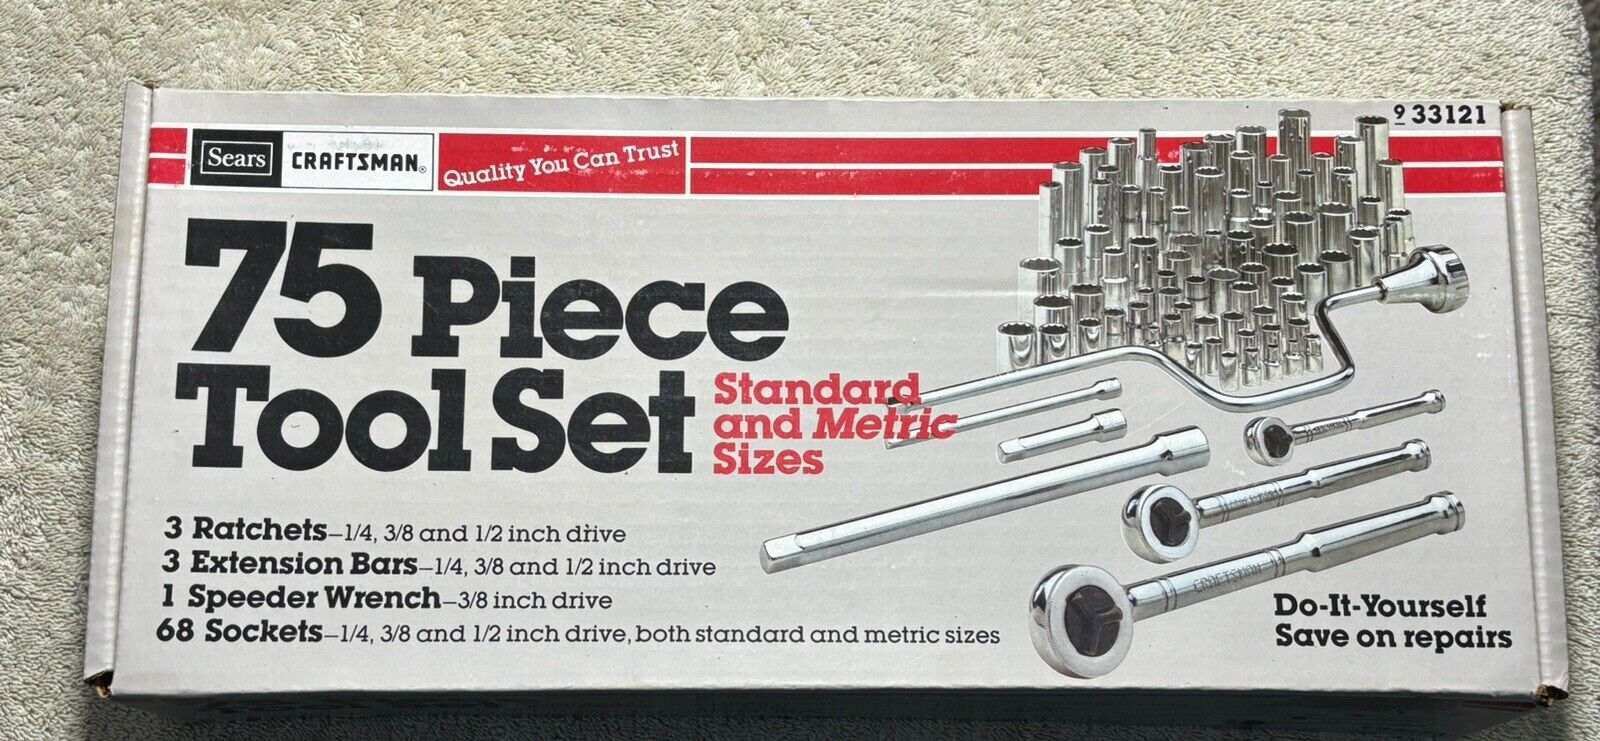 Sears Craftsman 75 Piece Tool Set THUMBWHEEL Ratchet 1/4, 3/8, 1/2 Factory Taped